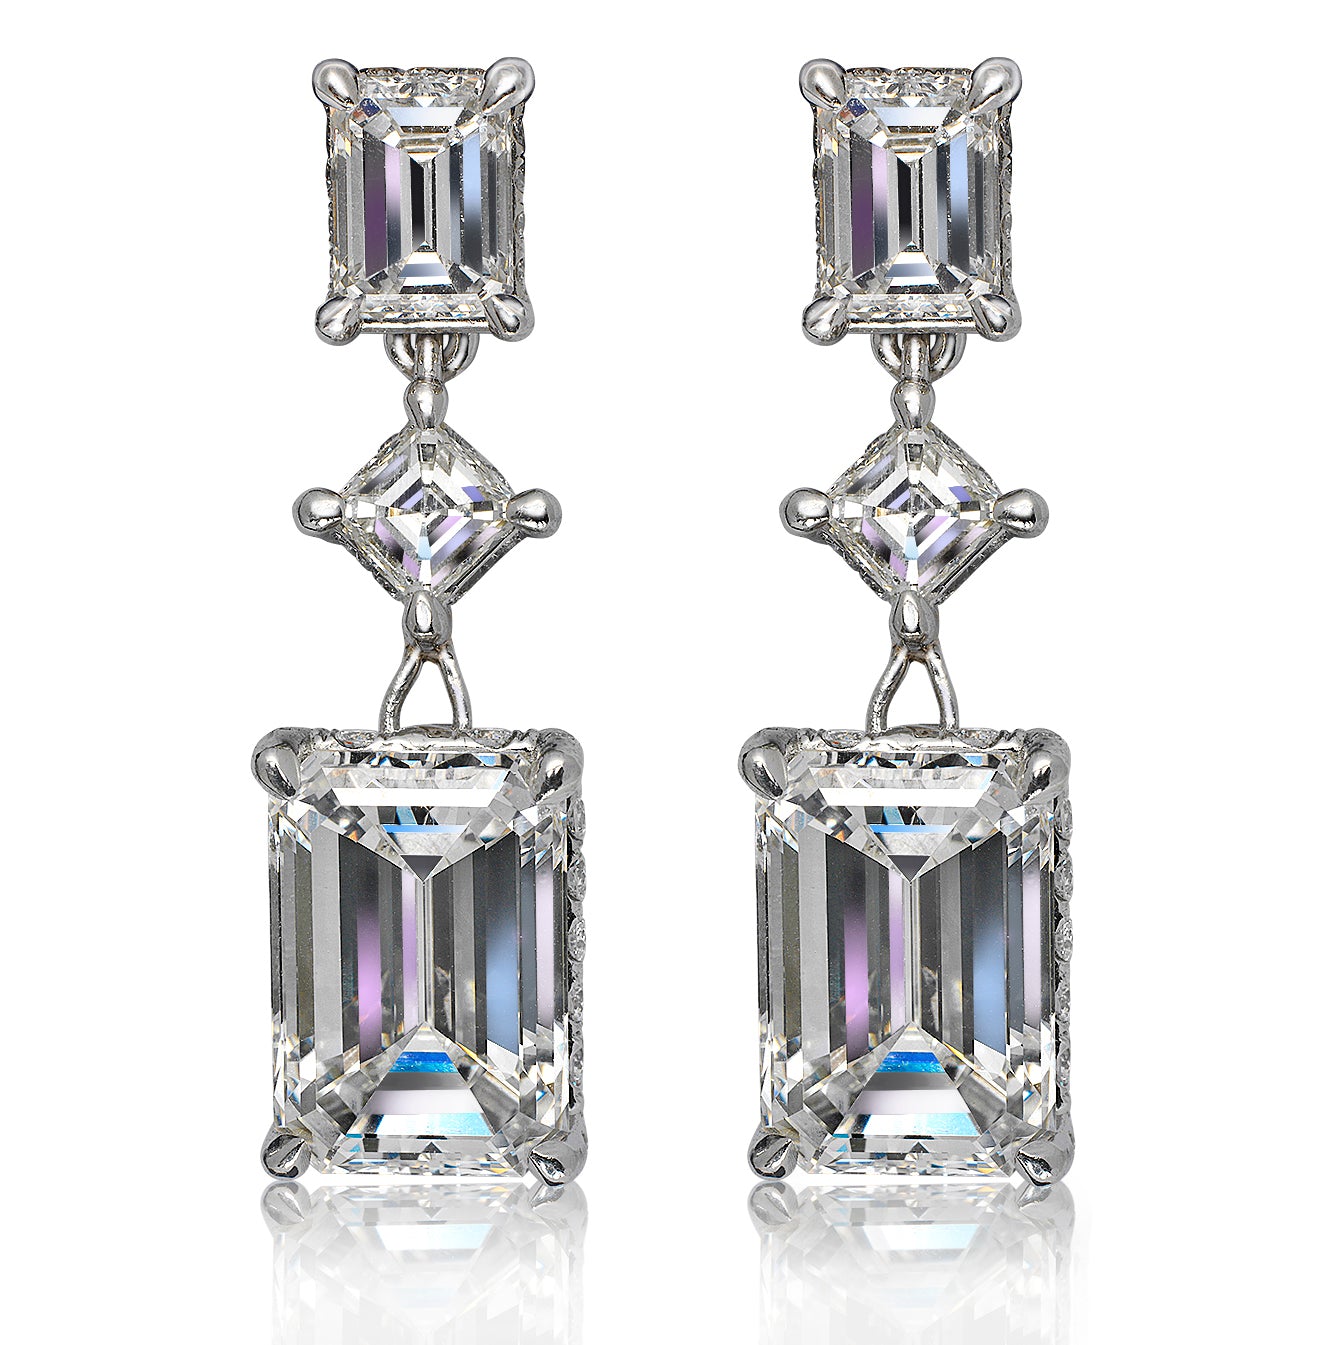 1 Carat Diamond Stud Earrings - Round Cut (GIA Certified)